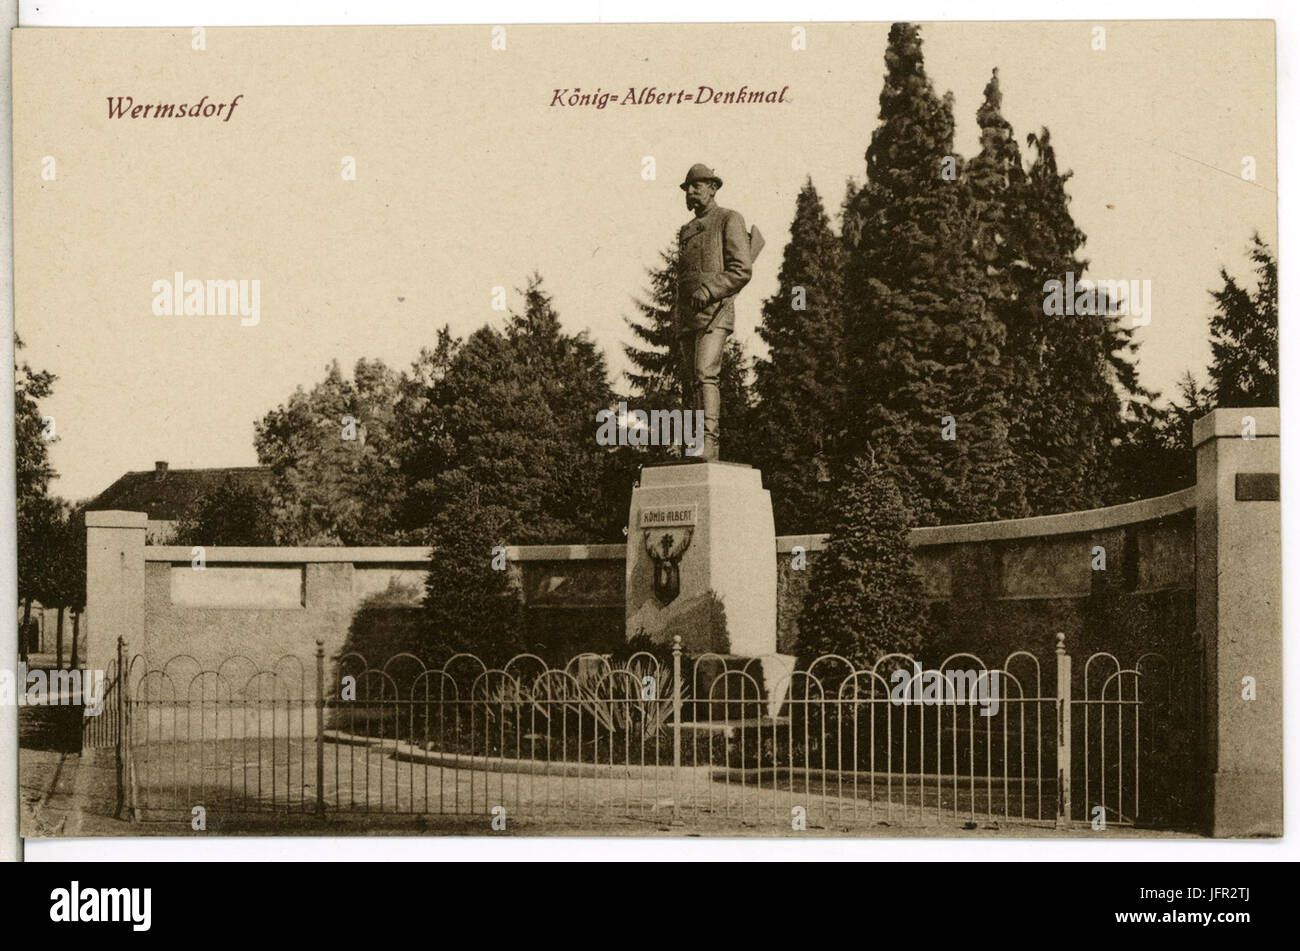 13021-Wermsdorf-1911-König Albert-Denkmal in Wermsdorf-Brück & Sohn Kunstverlag Stock Photo